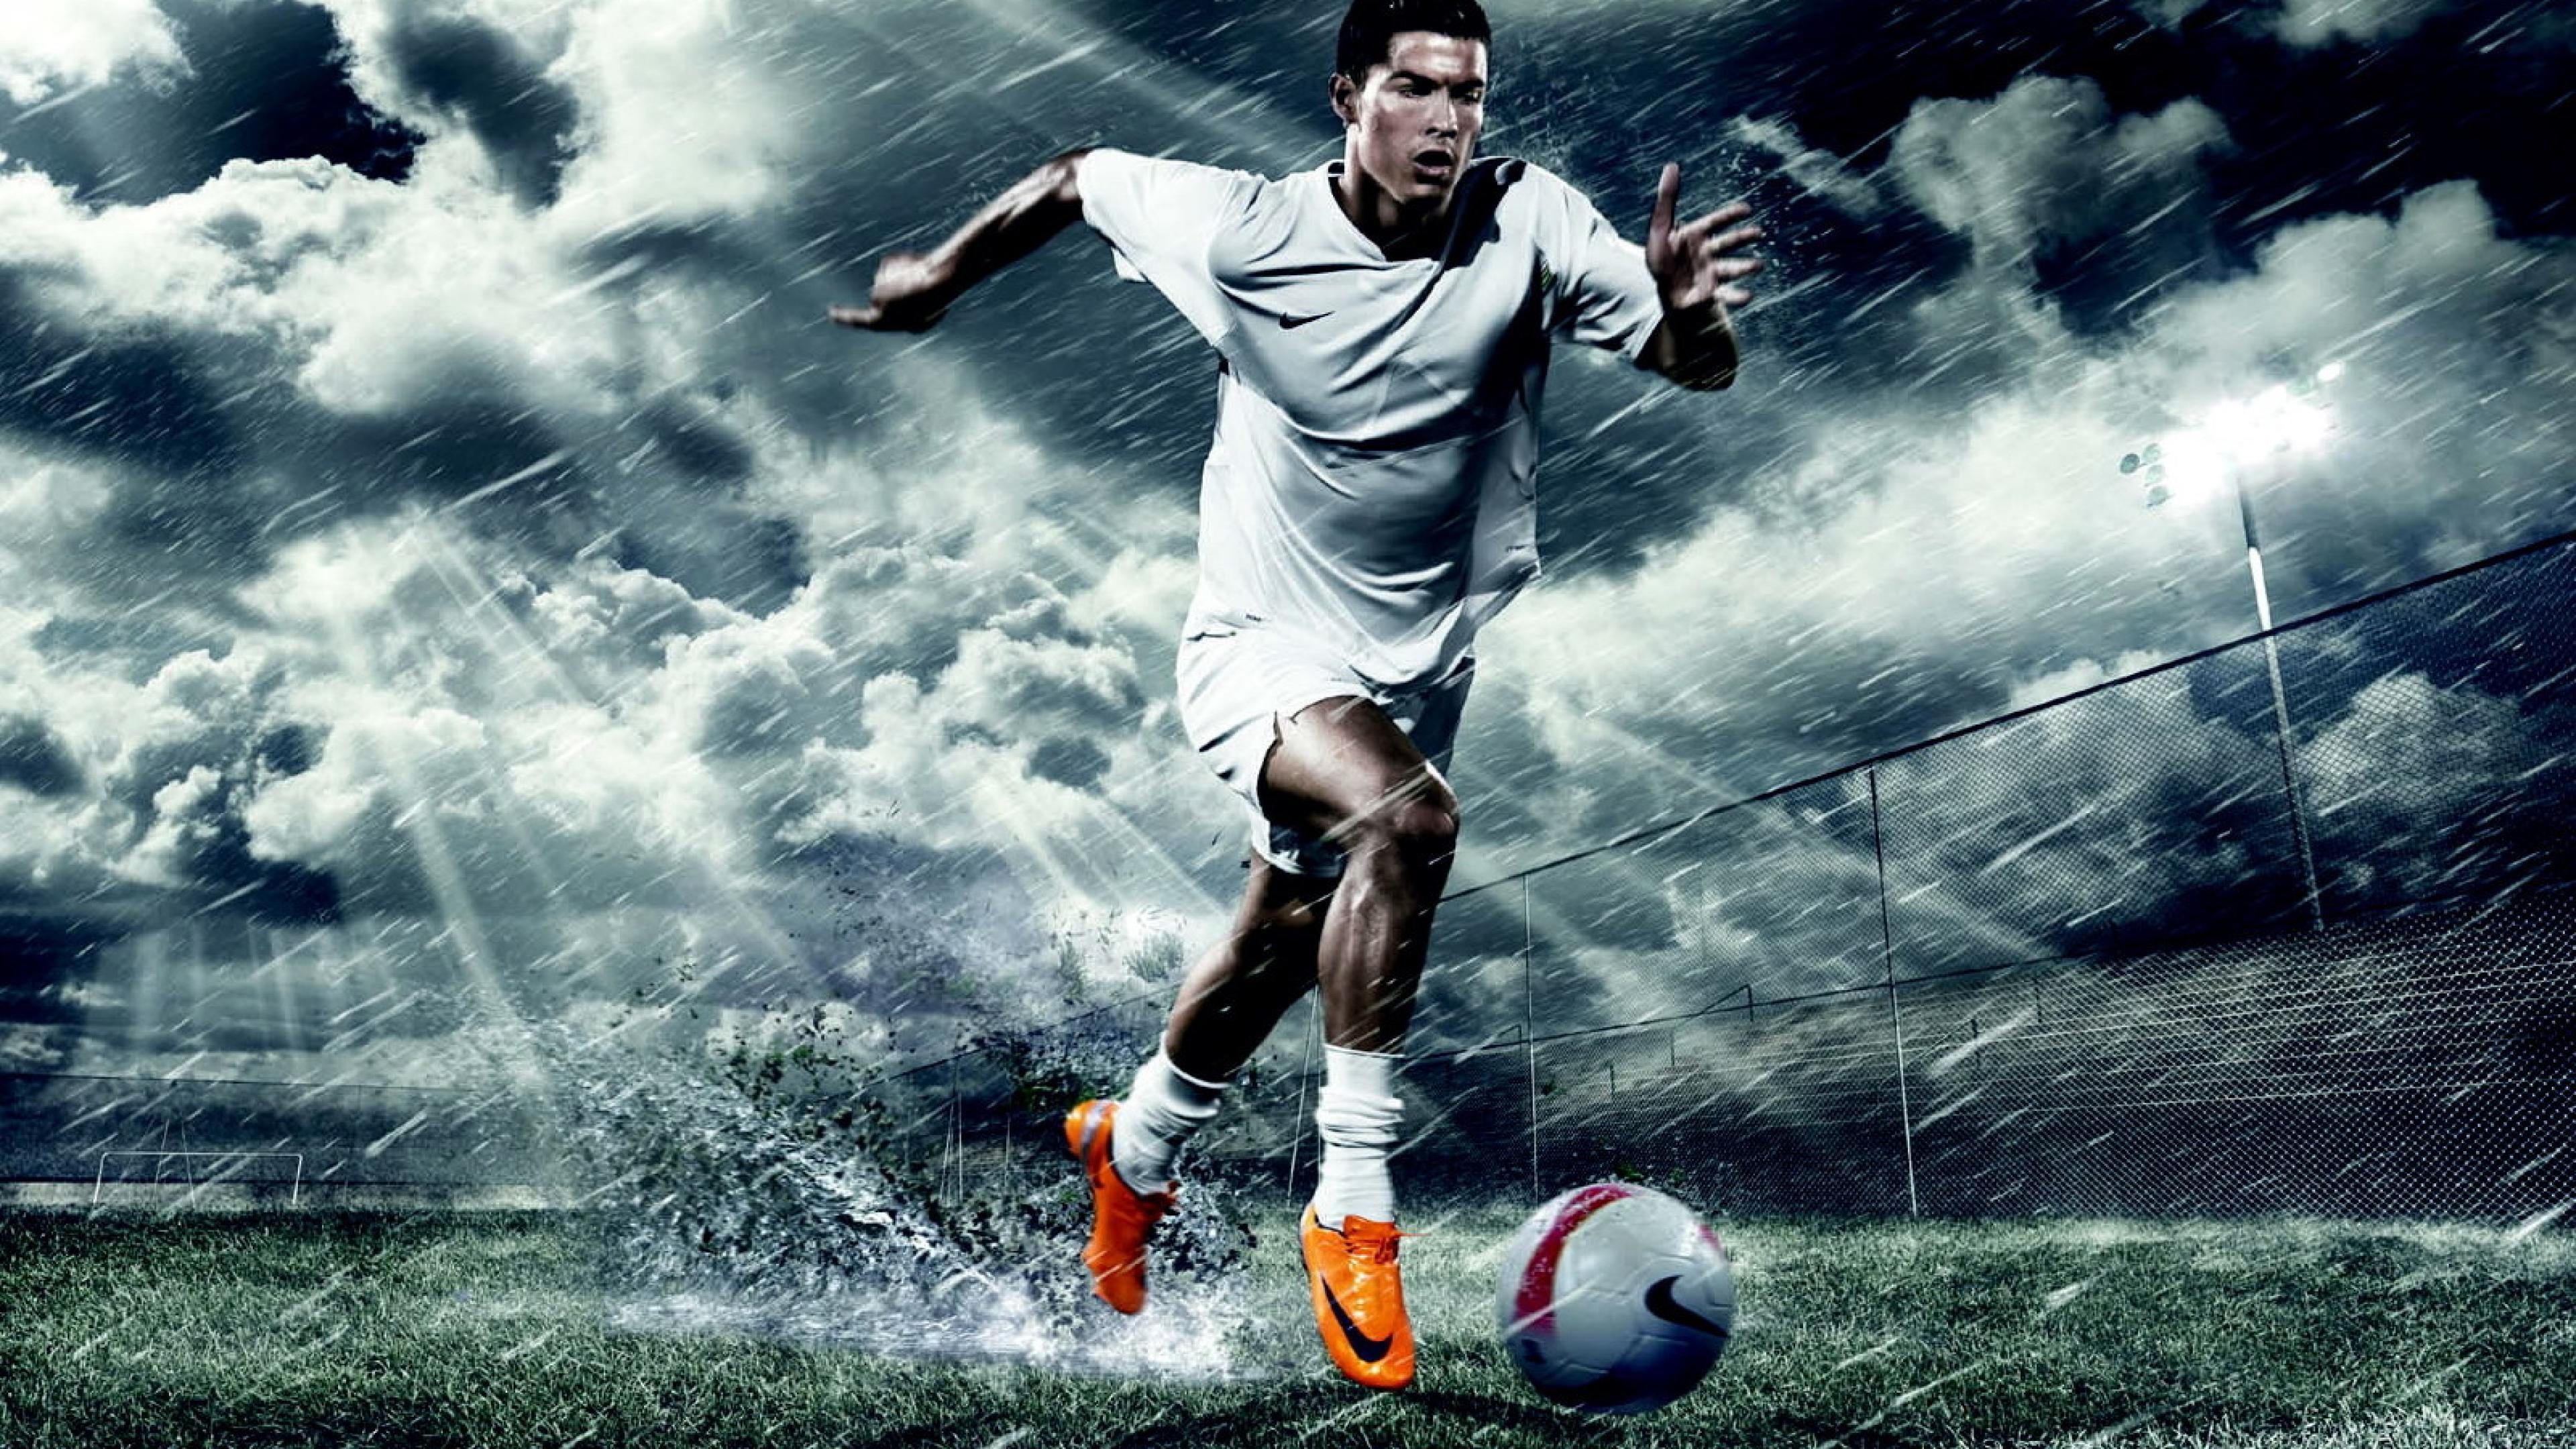 Download Running Stance Cristiano Ronaldo Hd 4k Wallpaper